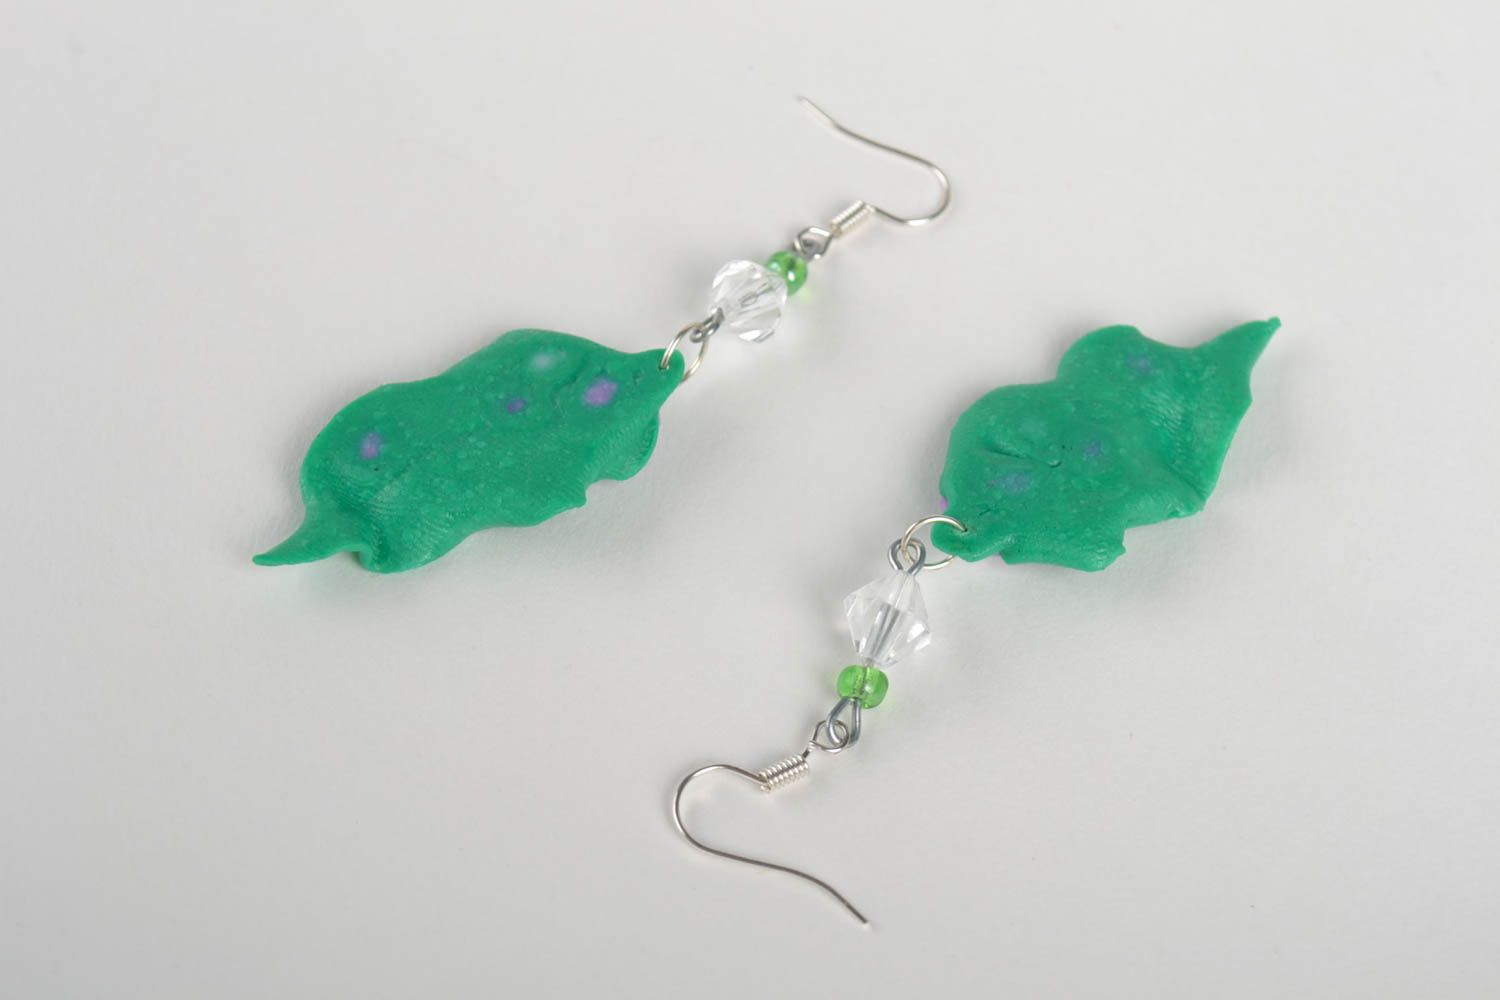 Handmade earrings designer earrings handcrafted jewelry polymer clay gift ideas photo 4